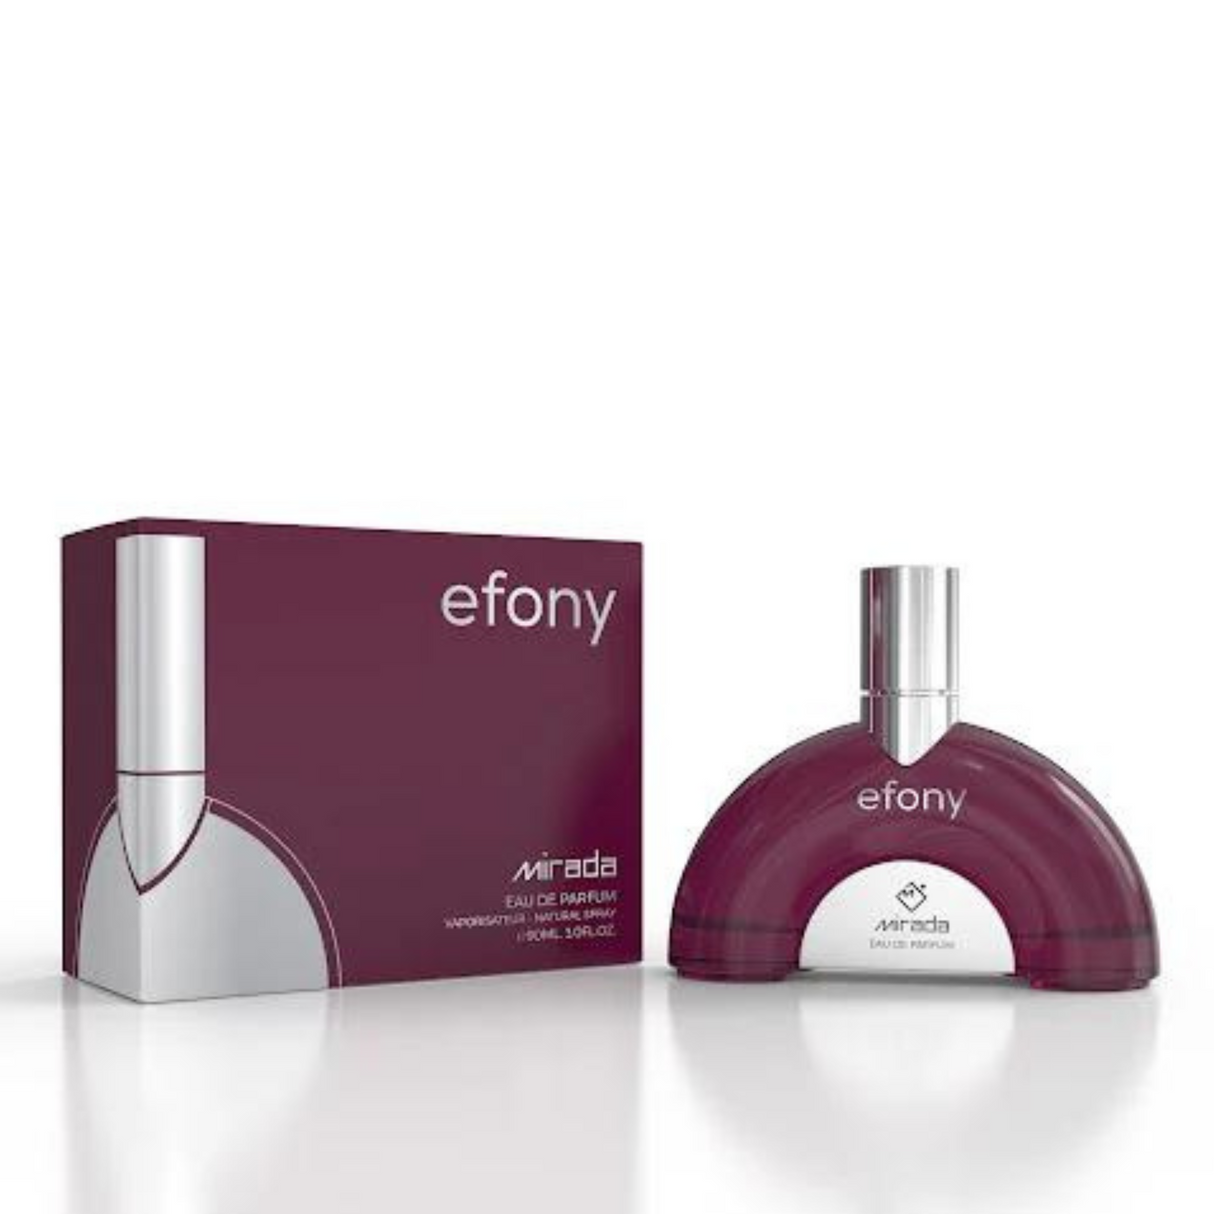 Mirada Efony Eau de Parfum (Pour Femme) 90ml - 3.0FL.OZ